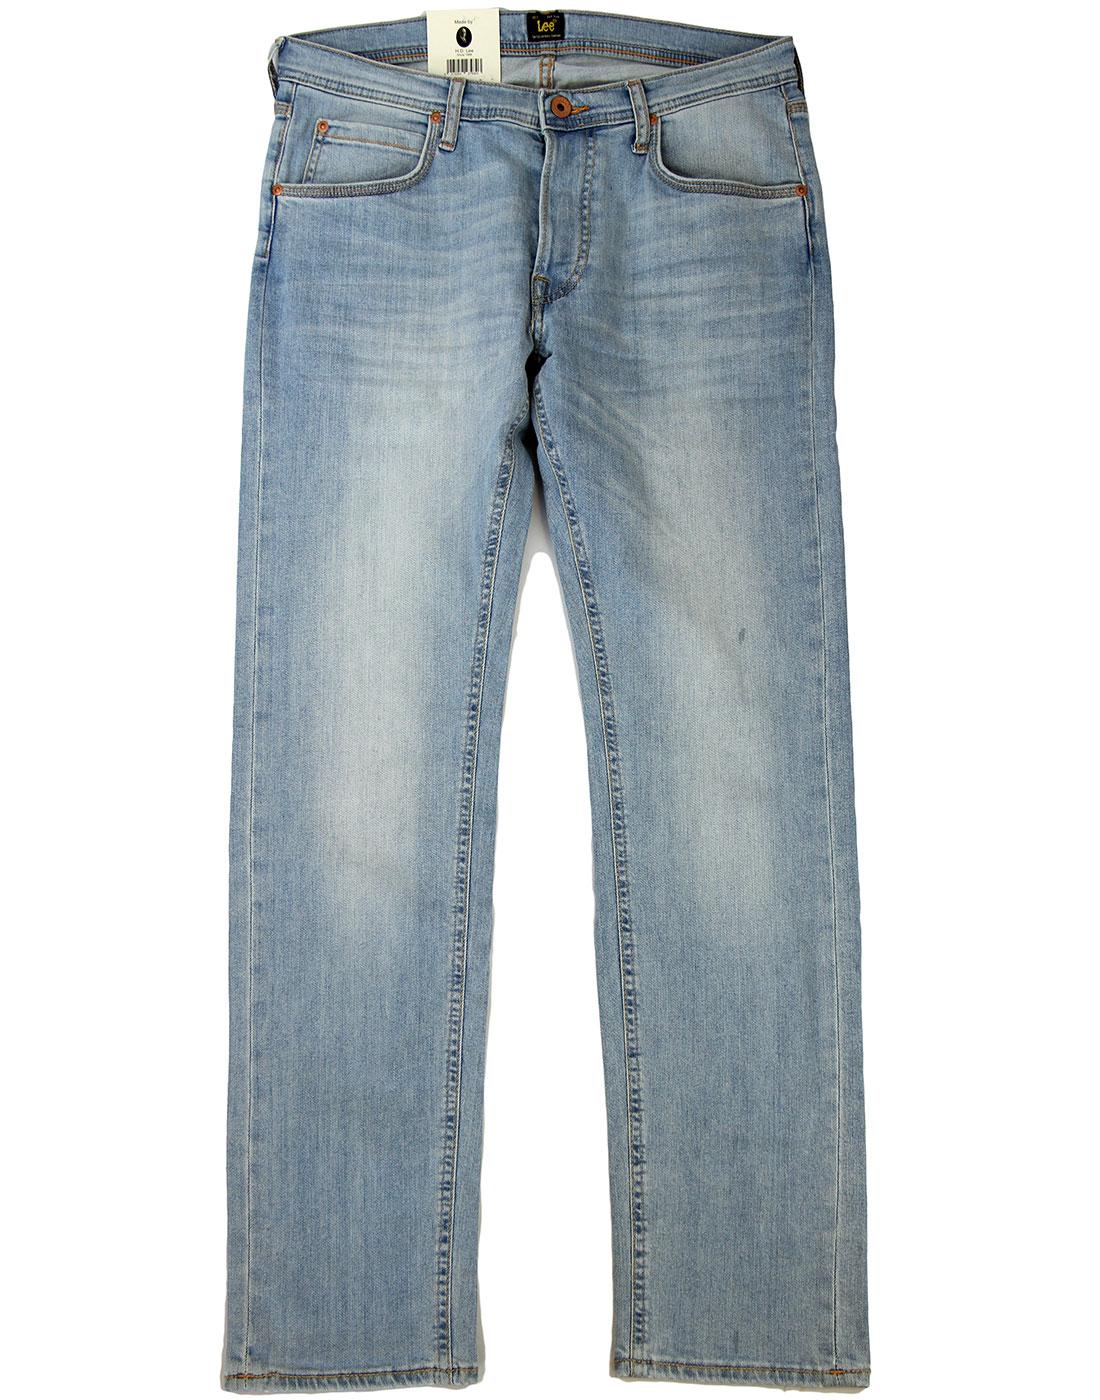 LEE JEANS Daren Retro Mod Regular Slim Fit Jeans Summer Wind